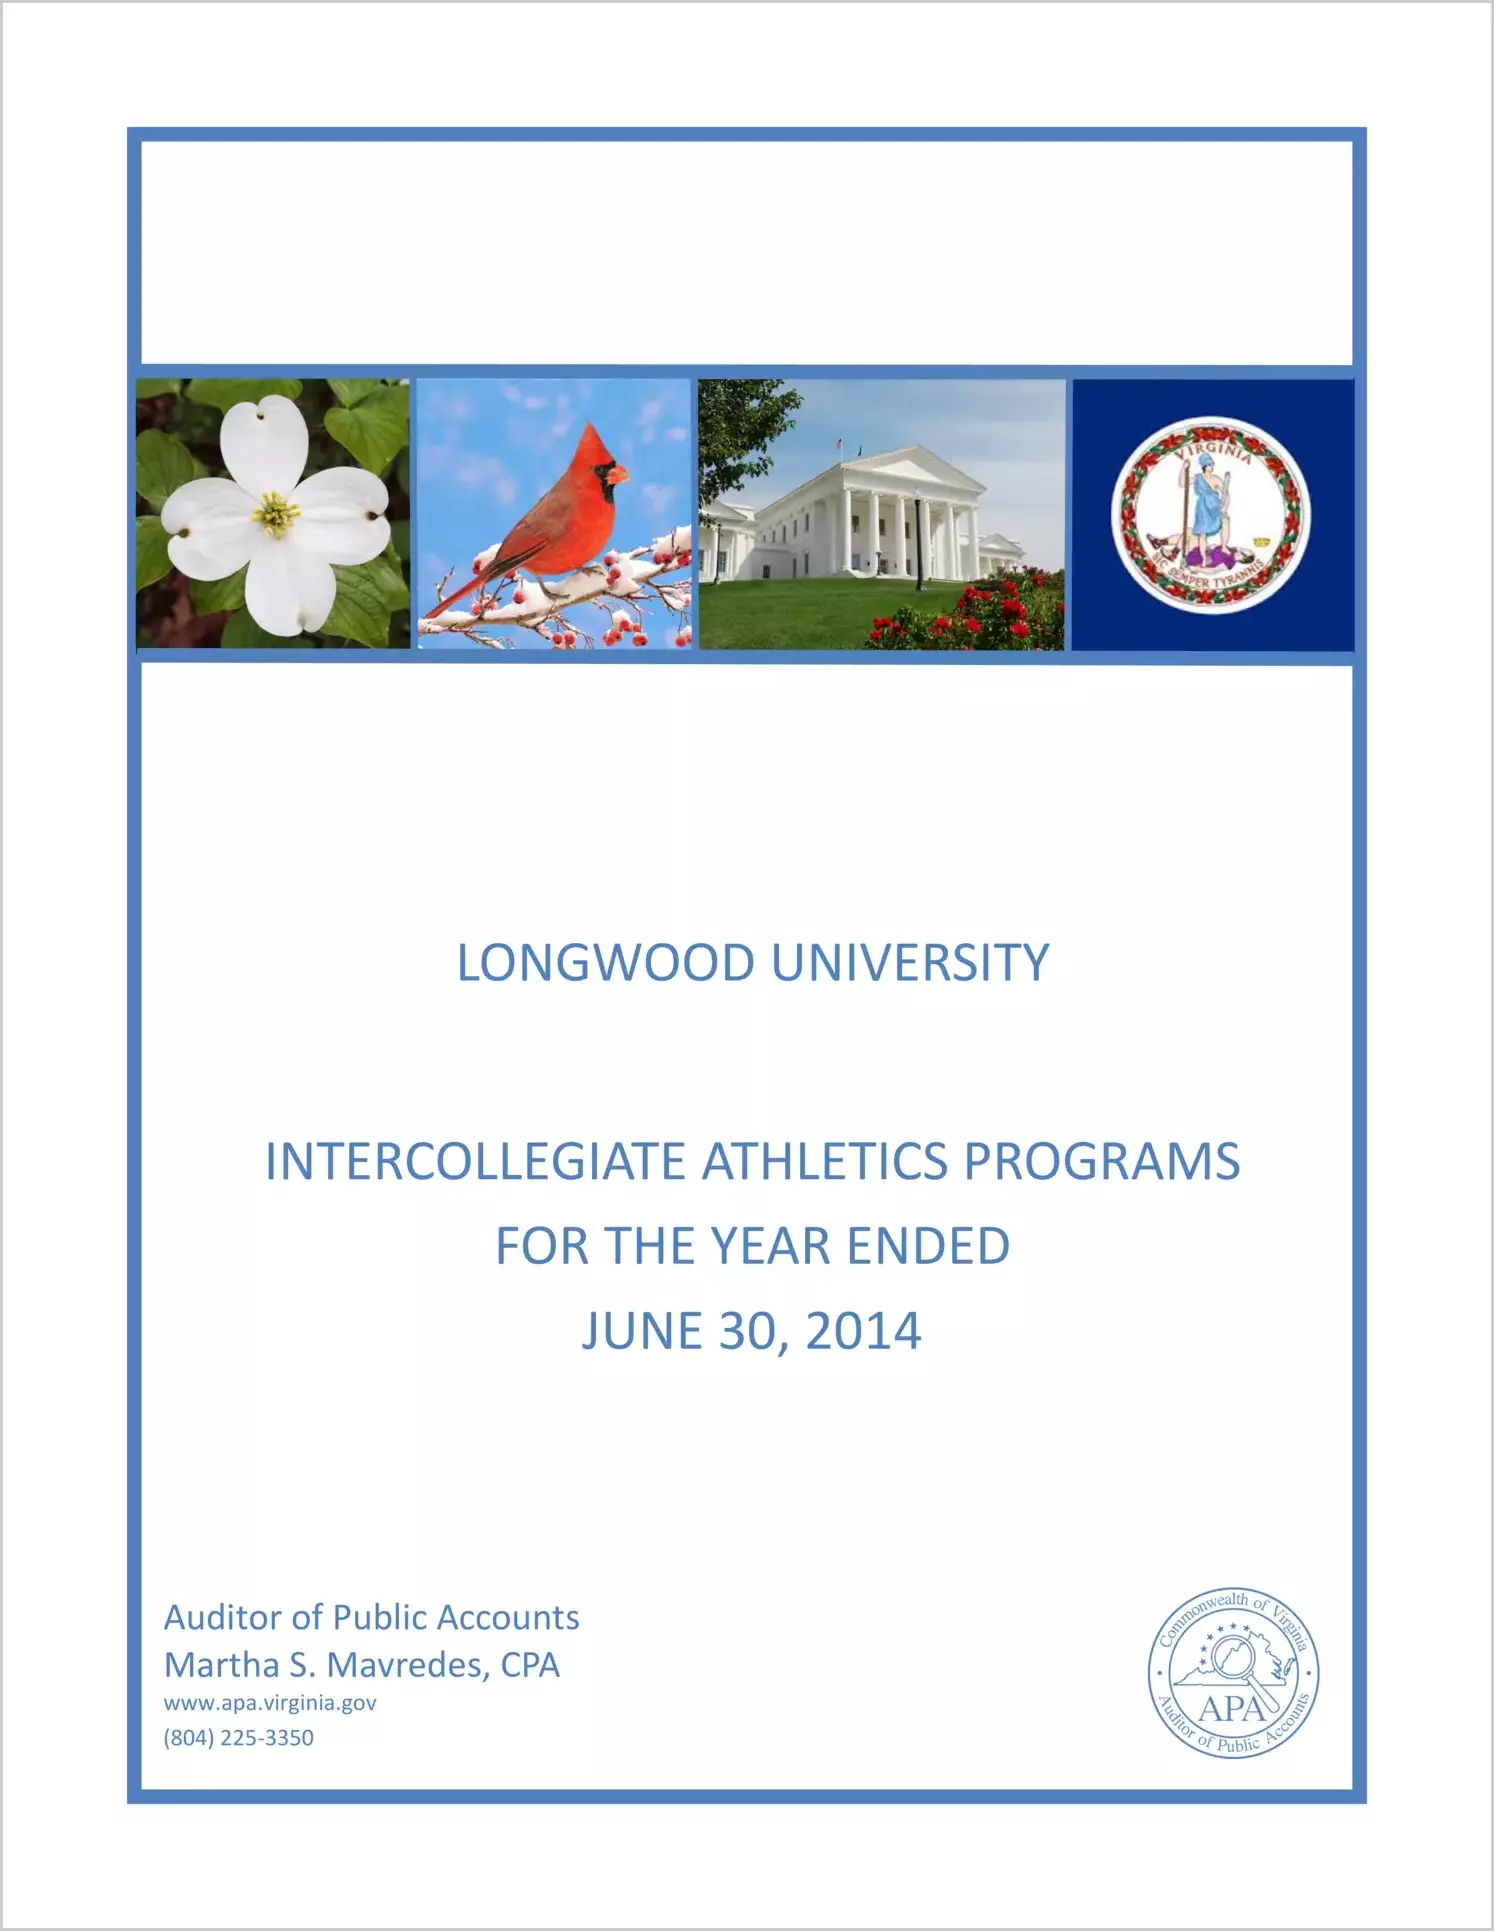 Longwood University Intercollegiate Athletics Programs report for the year ended June 30, 2014